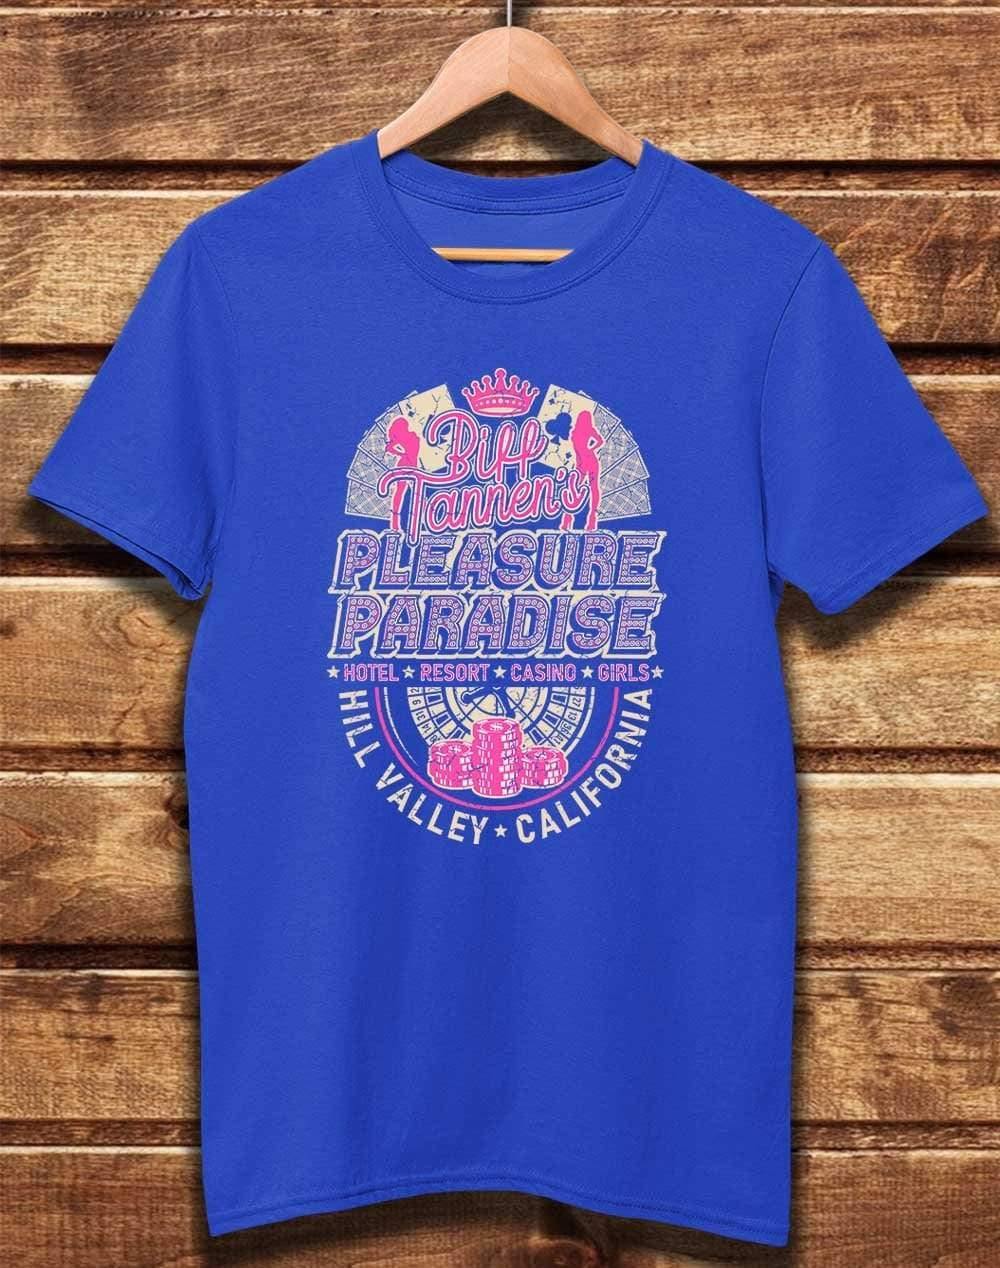 DELUXE Biff Tannen's Pleasure Paradise Organic Cotton T-Shirt XS / Bright Blue  - Off World Tees